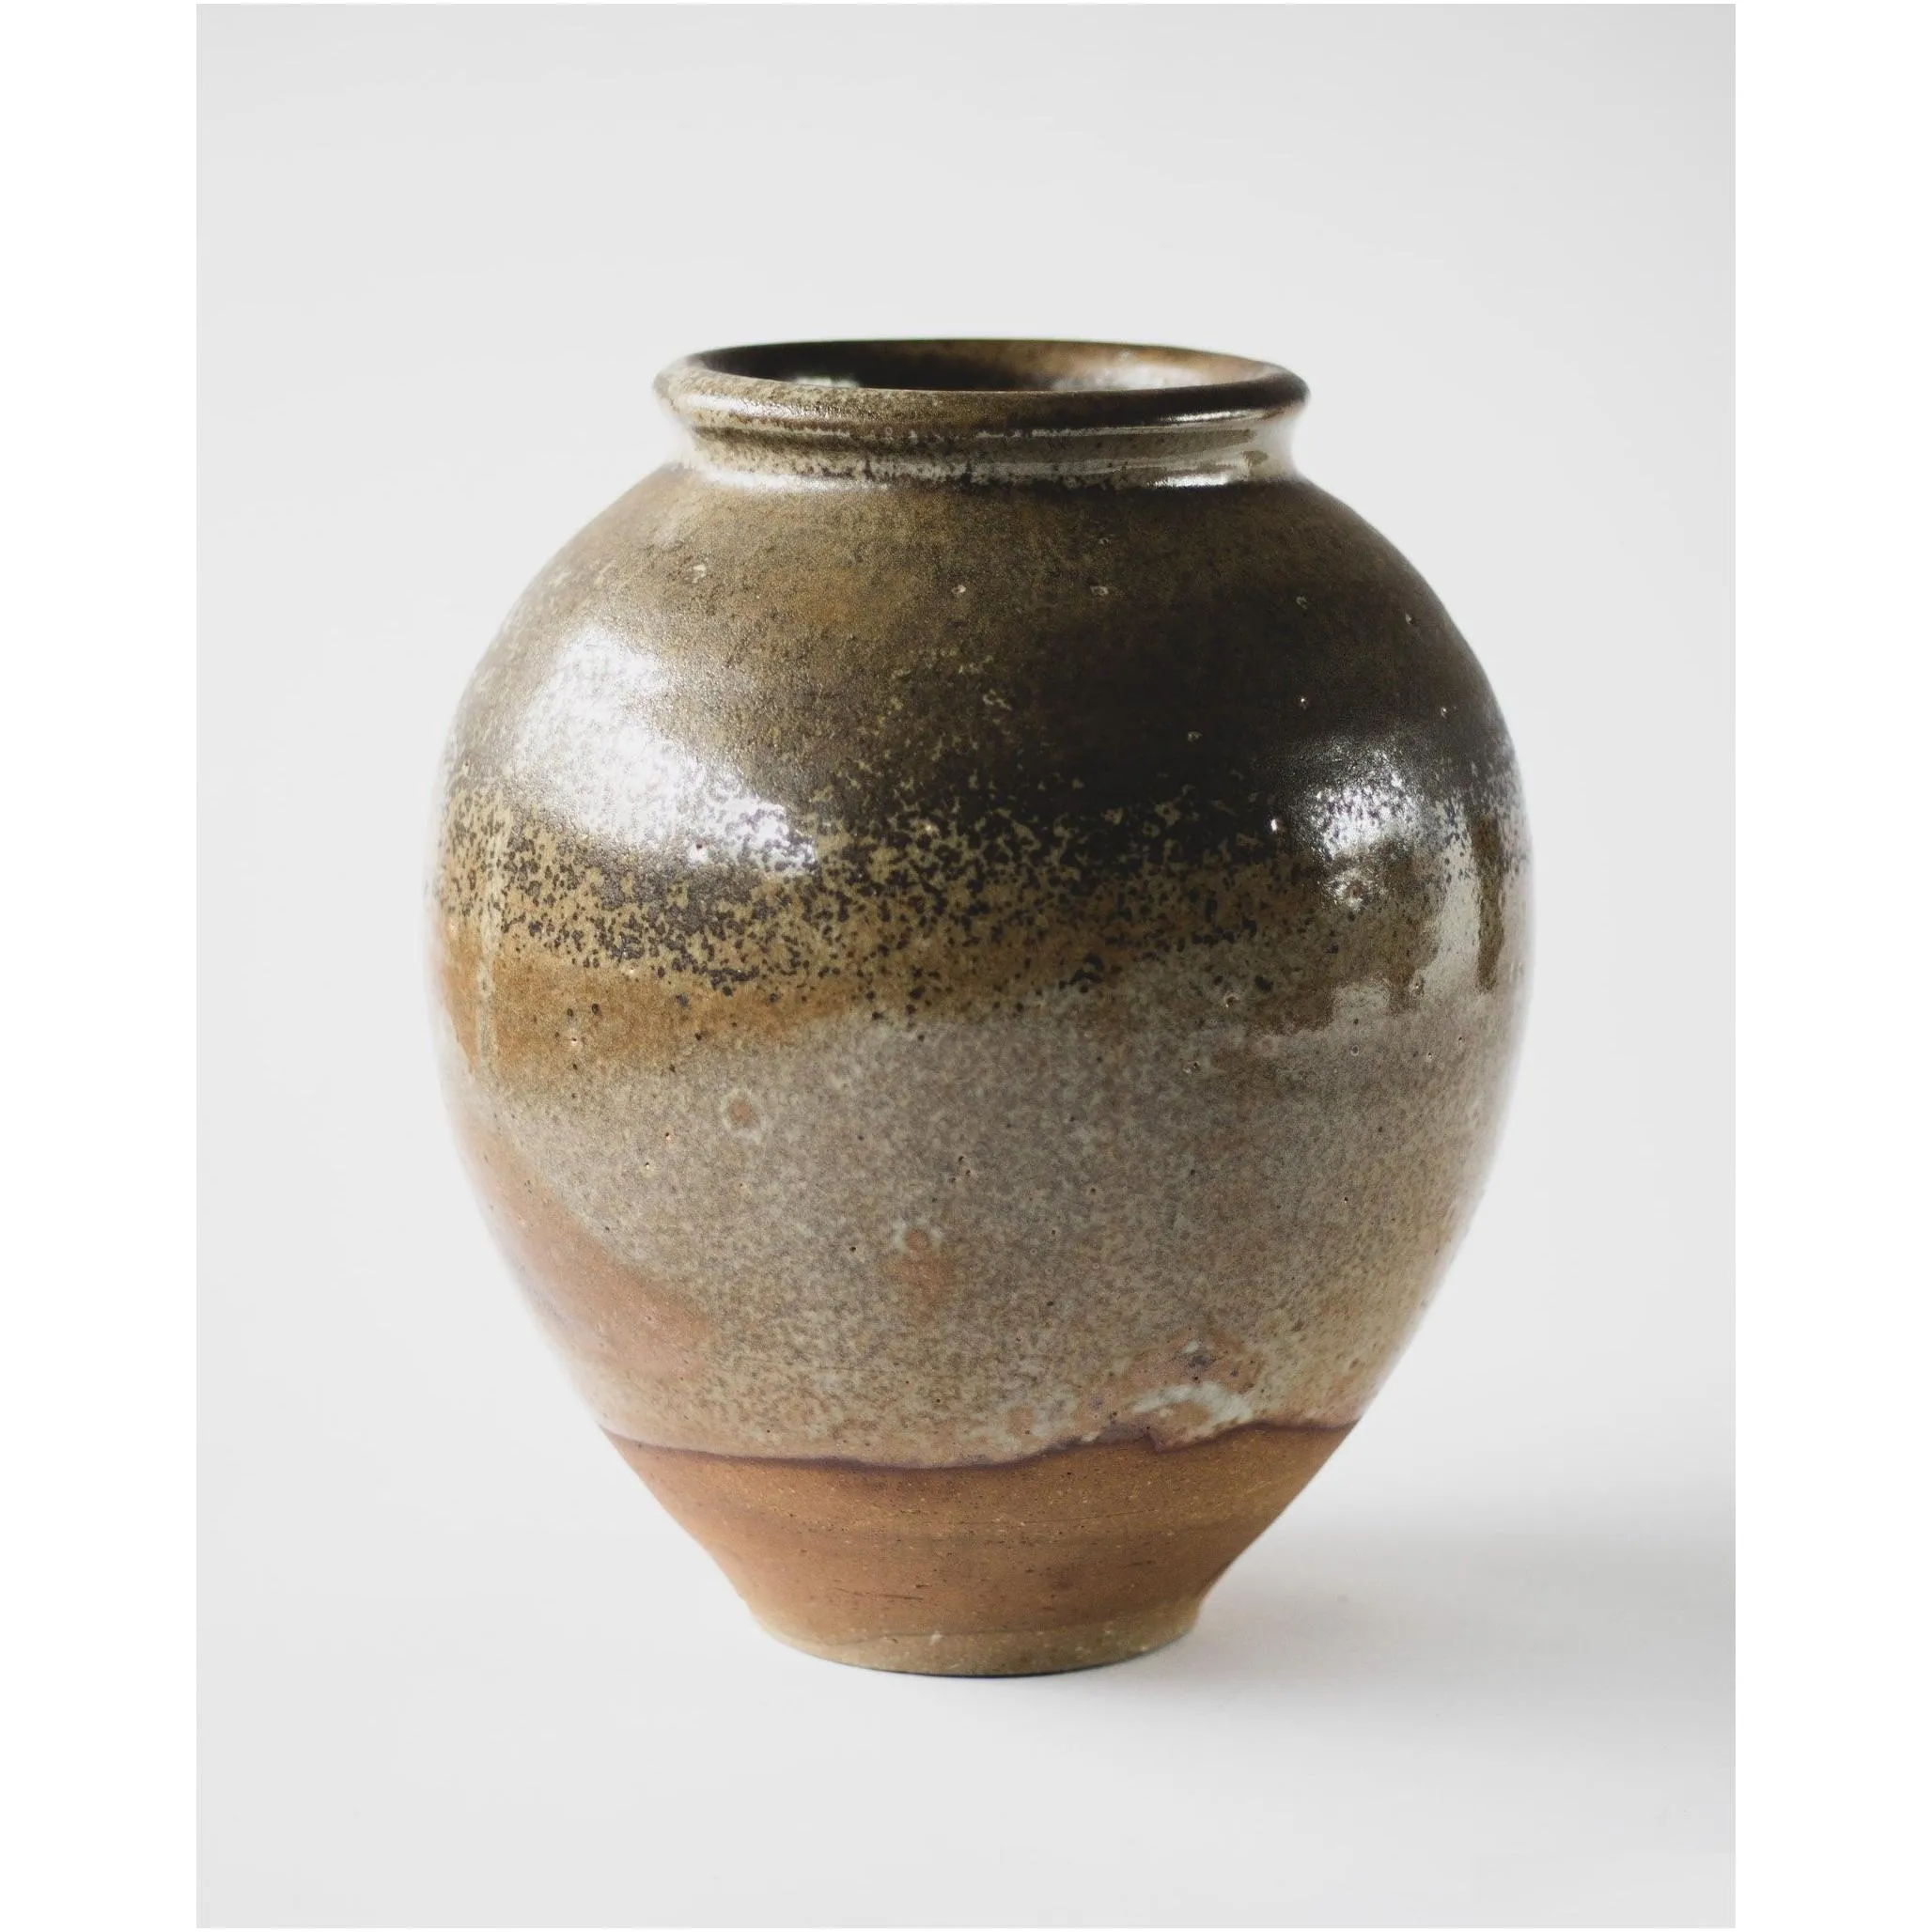 Vases Ceramic Vase With Iron Oxide Glaze Vintage Studio Y Large Decorative Wabi Sabi Drop Delivery Home Garden Home Decor Otgb1